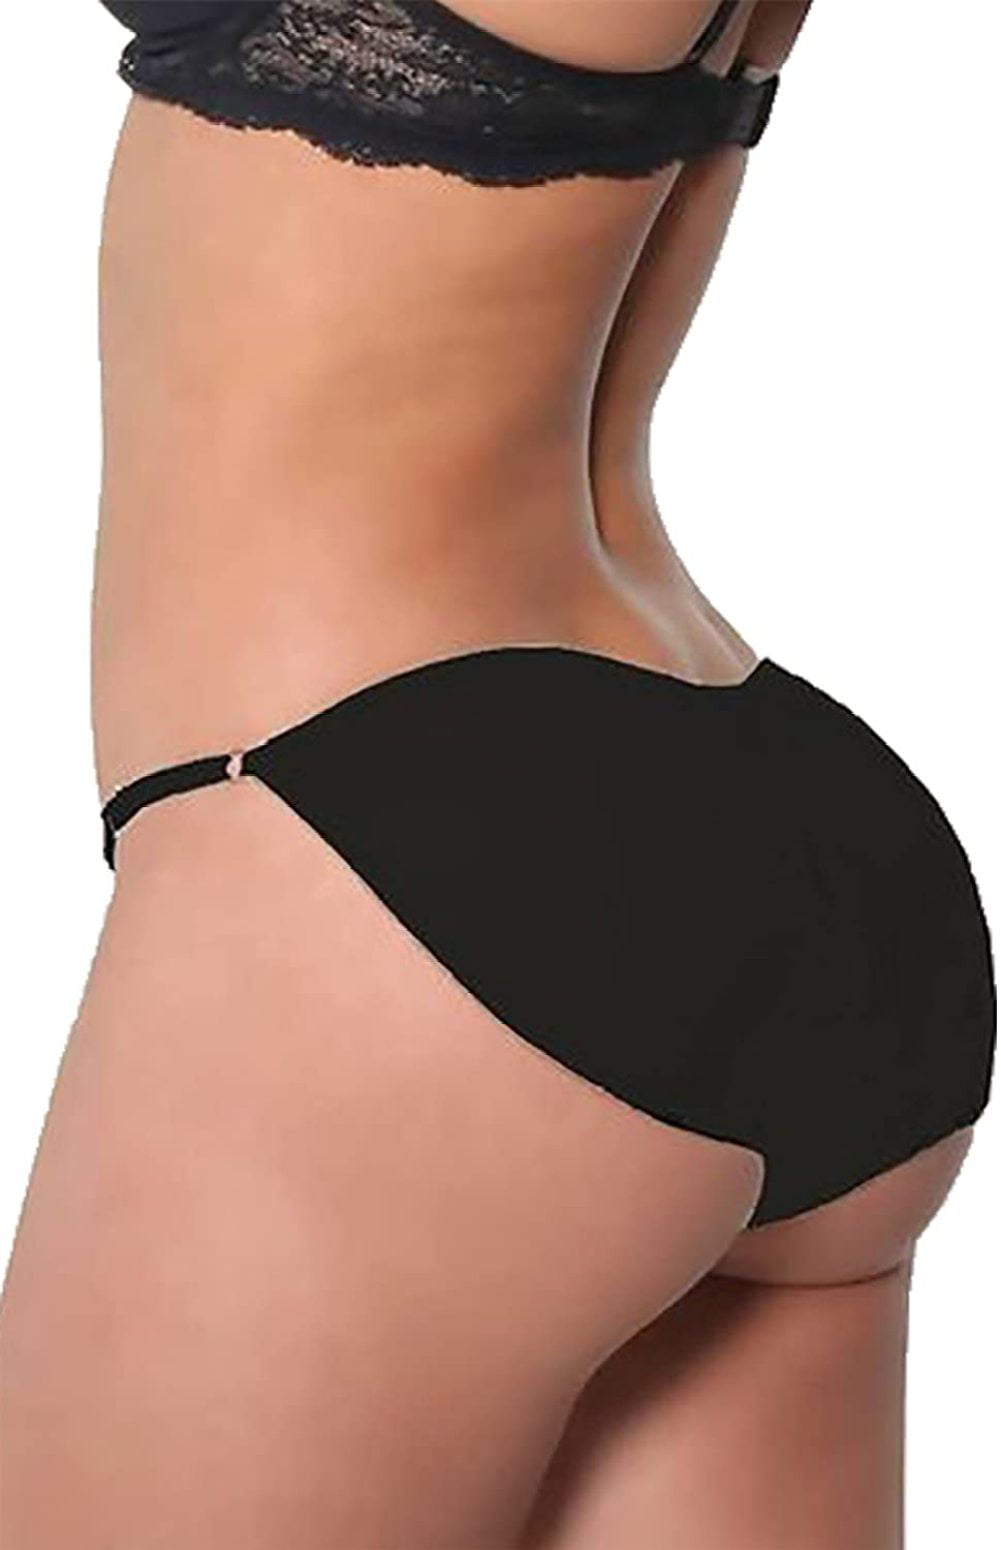 Women Bikini Booty Booster From Flat to Curvy Butt Padded Panties Enhancer 8015 